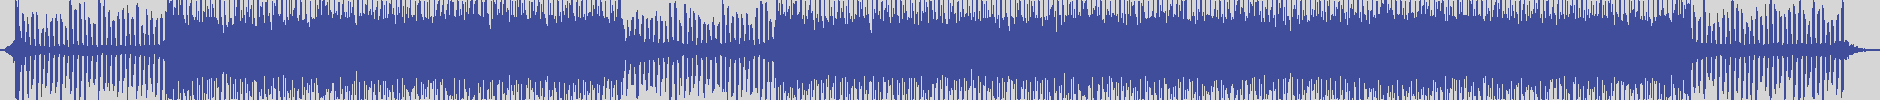 nf_boyz_records [NFY070] Ouardia Haisma - Second Life [Level 2 Mix] audio wave form